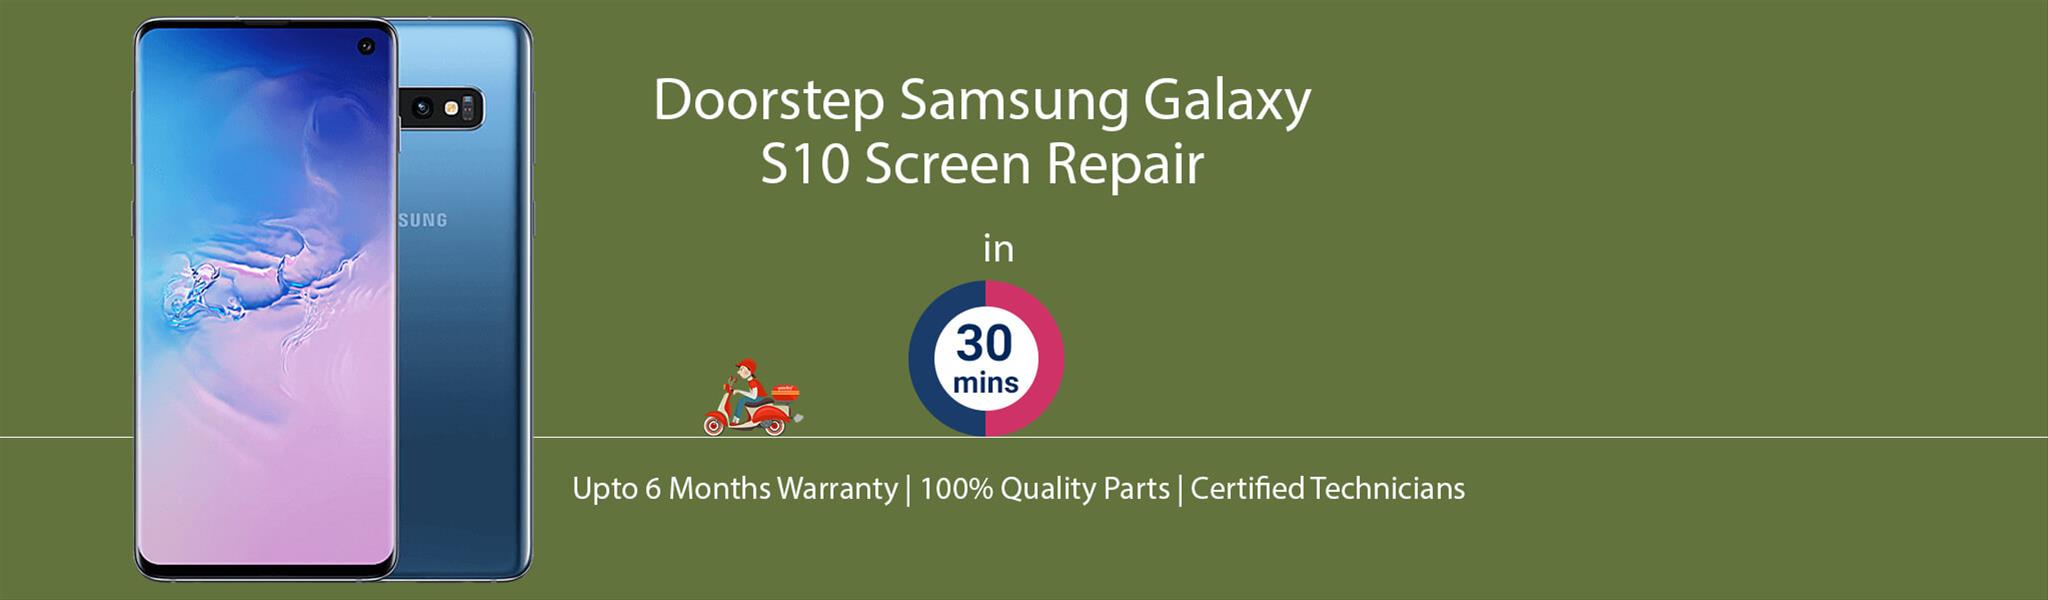 samsung-galaxy-s10-screen-repair.jpg